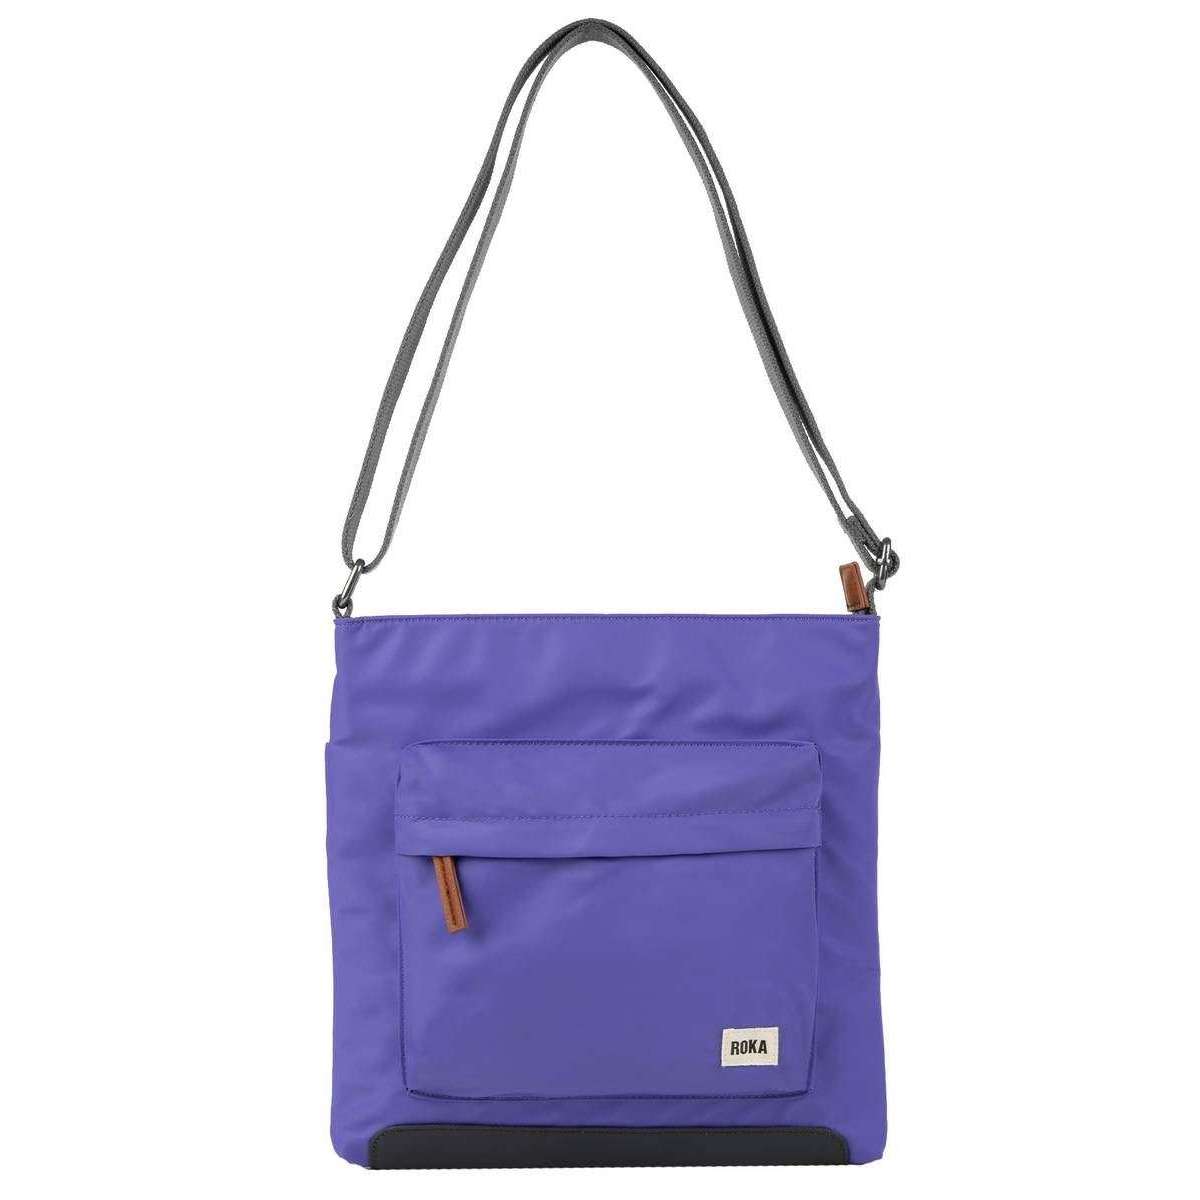 Roka Kennington B Medium Sustainable Nylon Cross Body Bag - Peri Purple